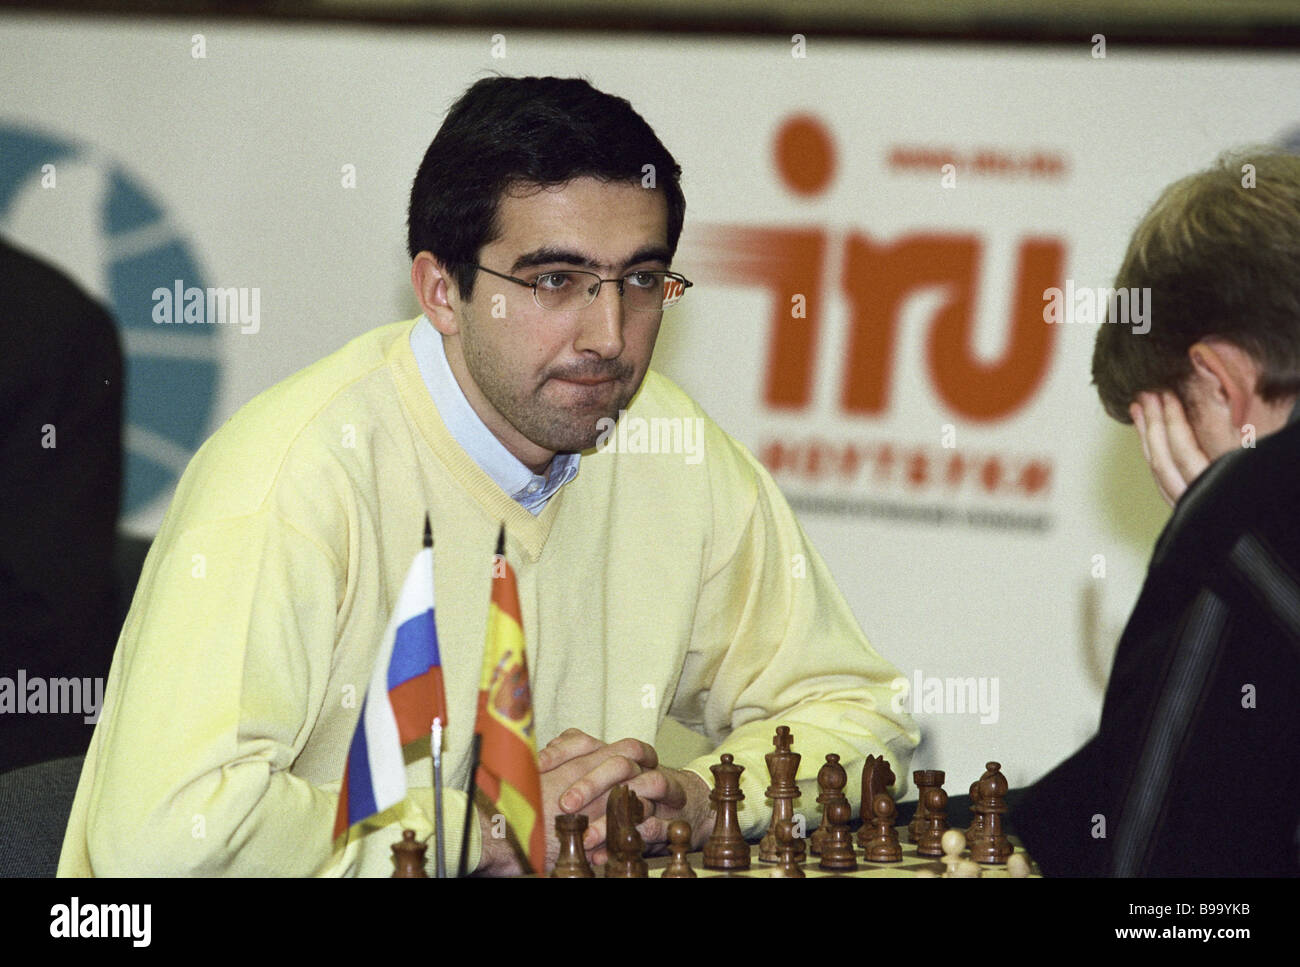 Vladimir Kramnik: The World Chess Championship Candidate 